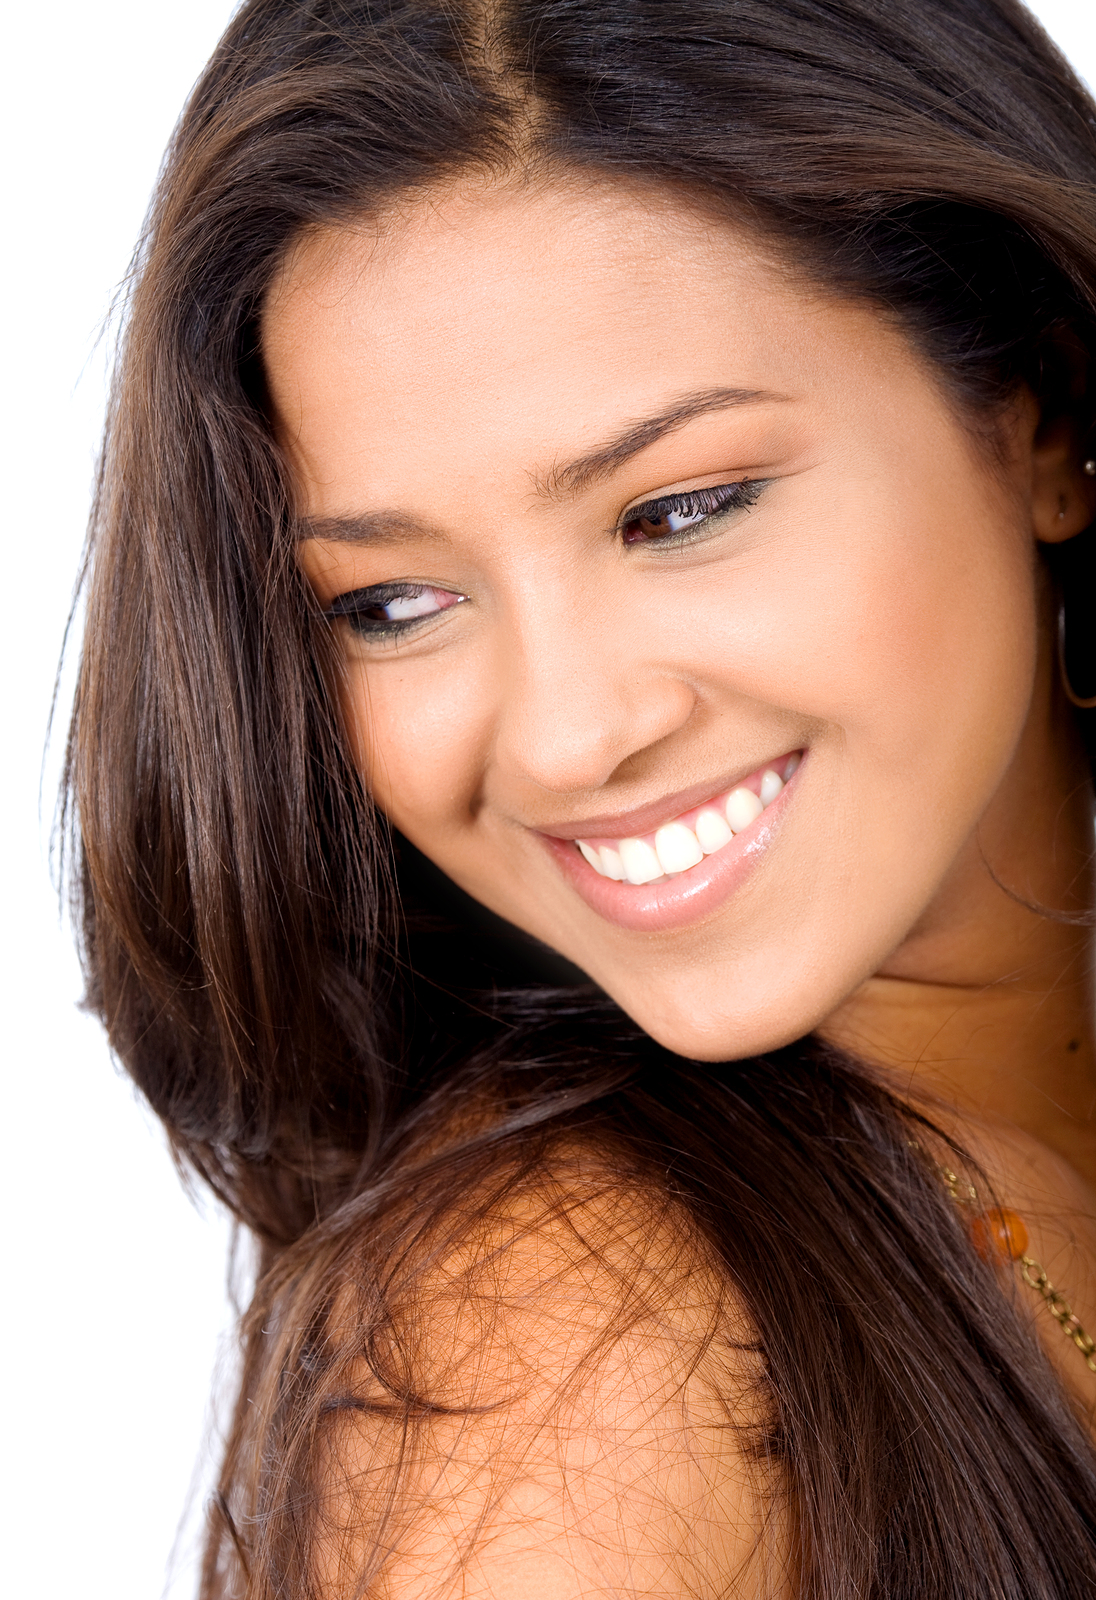 beautiful dark haired woman smiling, bright white teeth, Old Bridge, NJ cosmetic dentistry